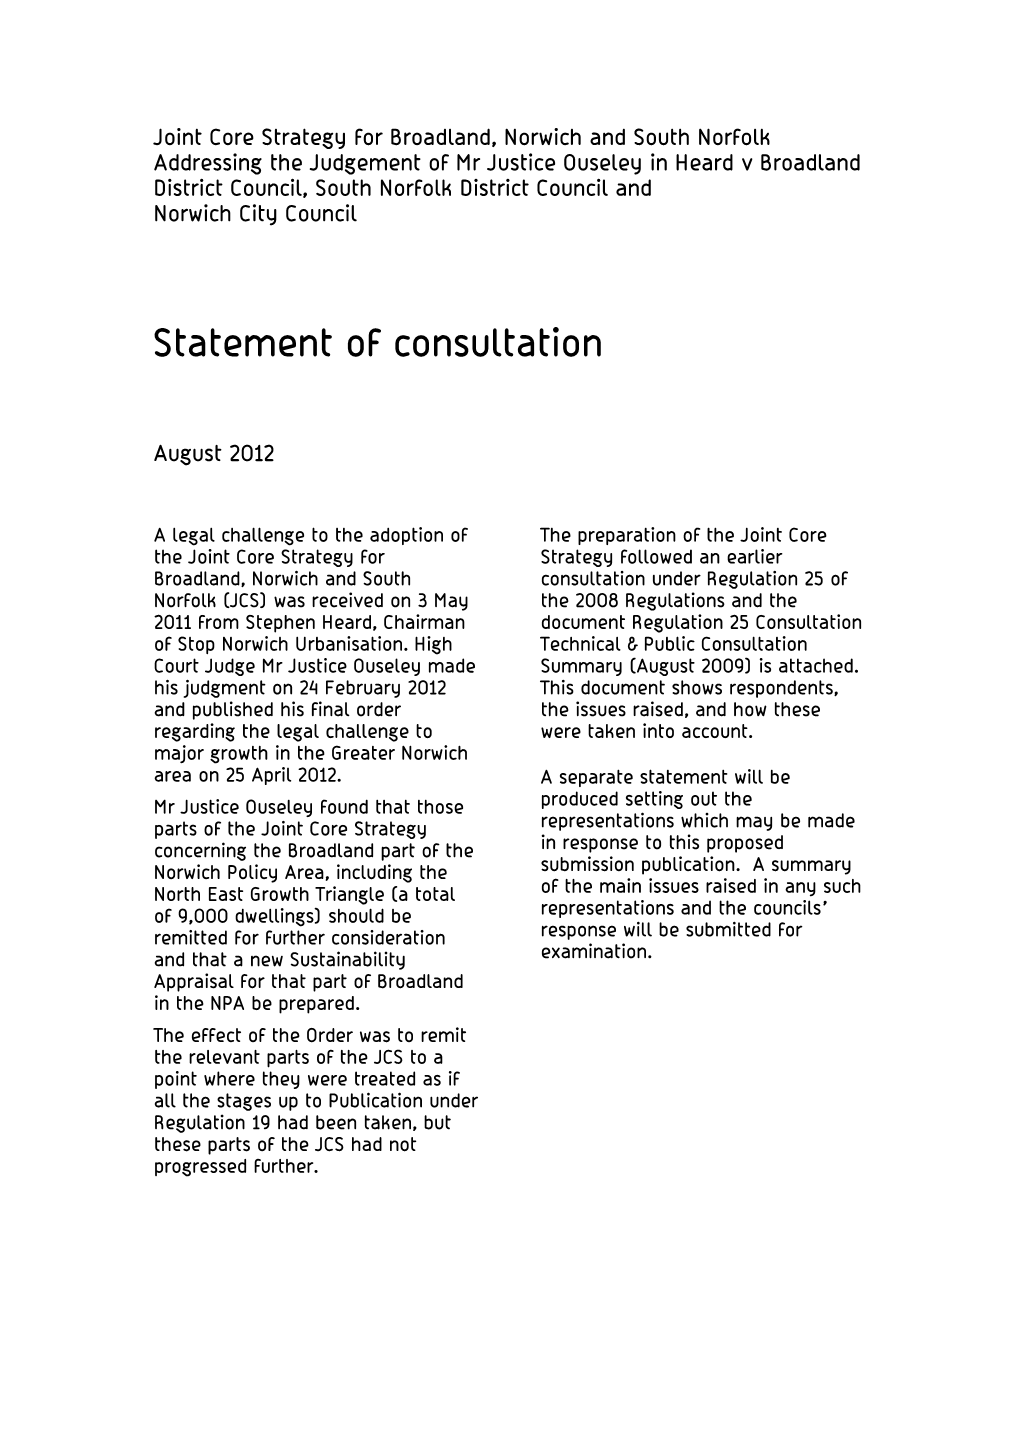 Statement of Consultation